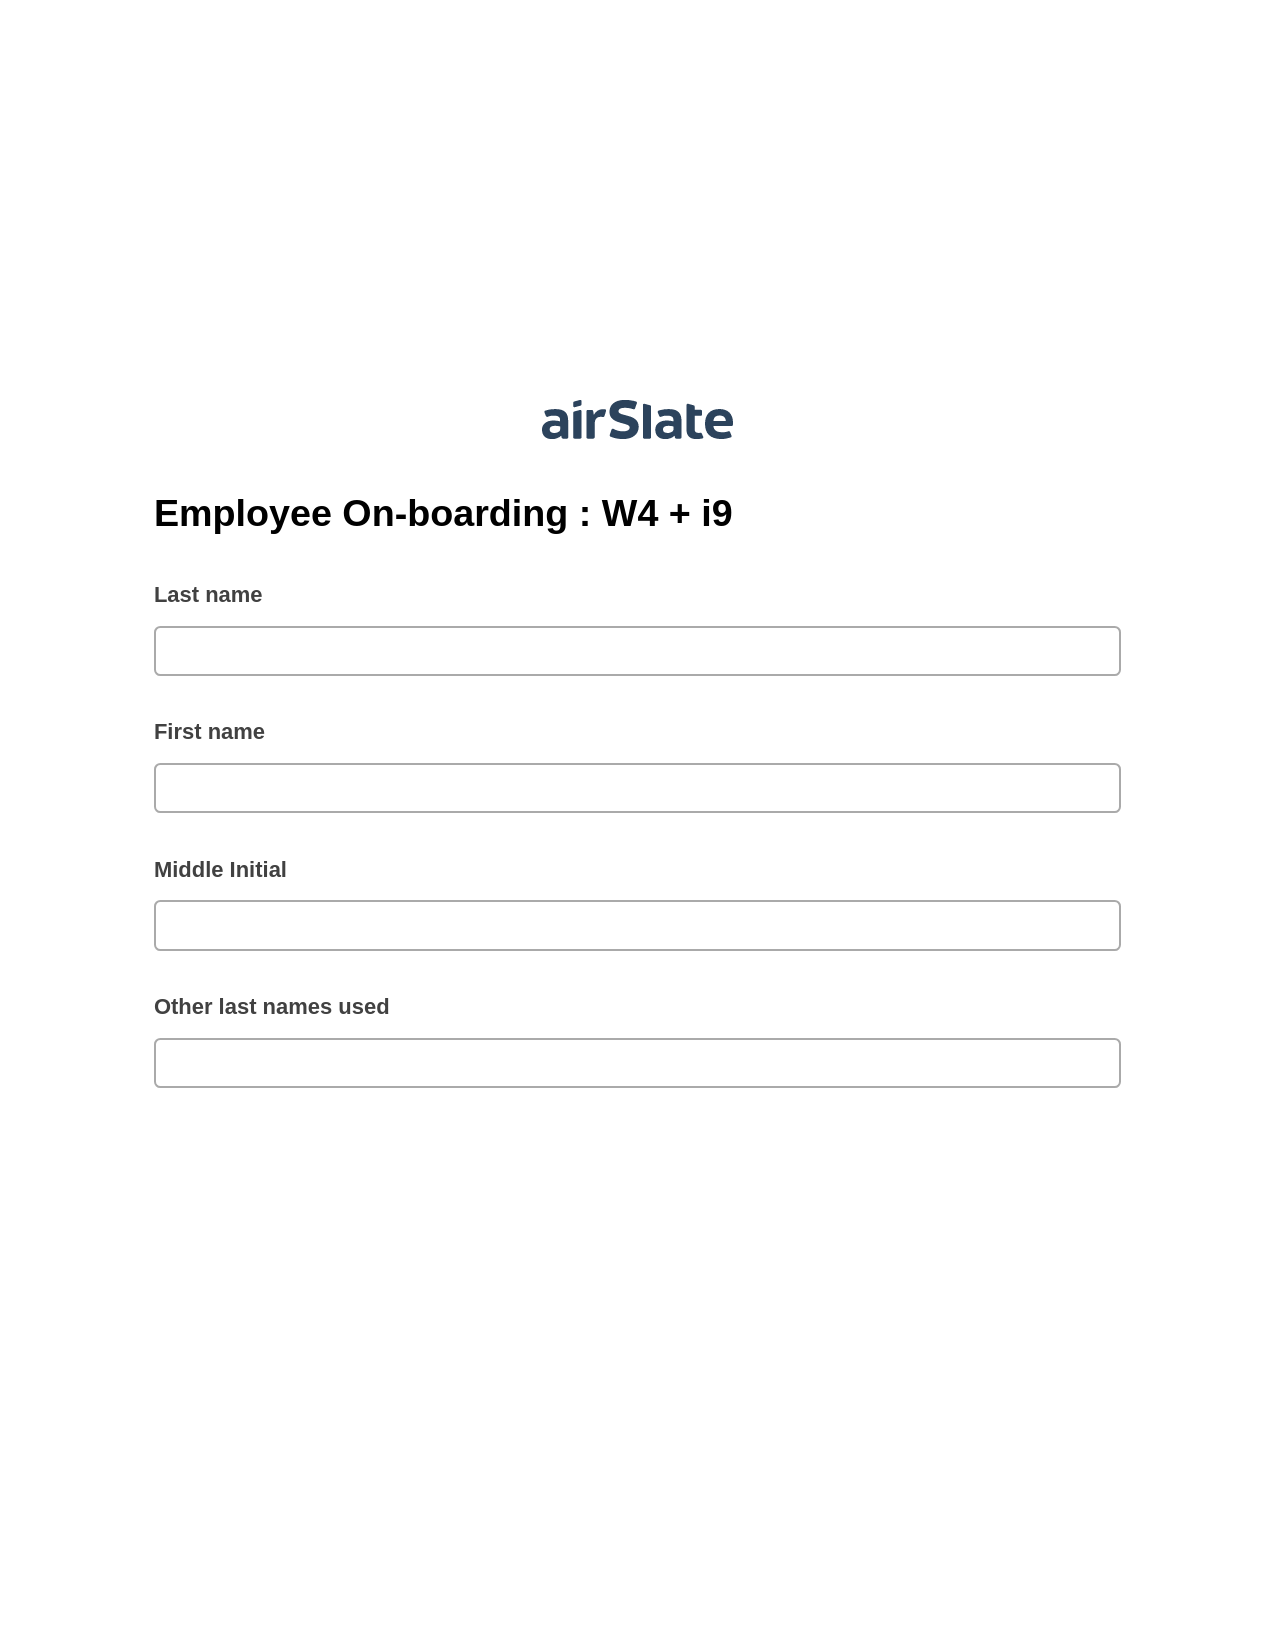 Multirole Employee On-boarding : W4 + i9 Pre-fill from Salesforce Records Bot, SendGrid Send Campaign Bot, Slack Notification Postfinish Bot